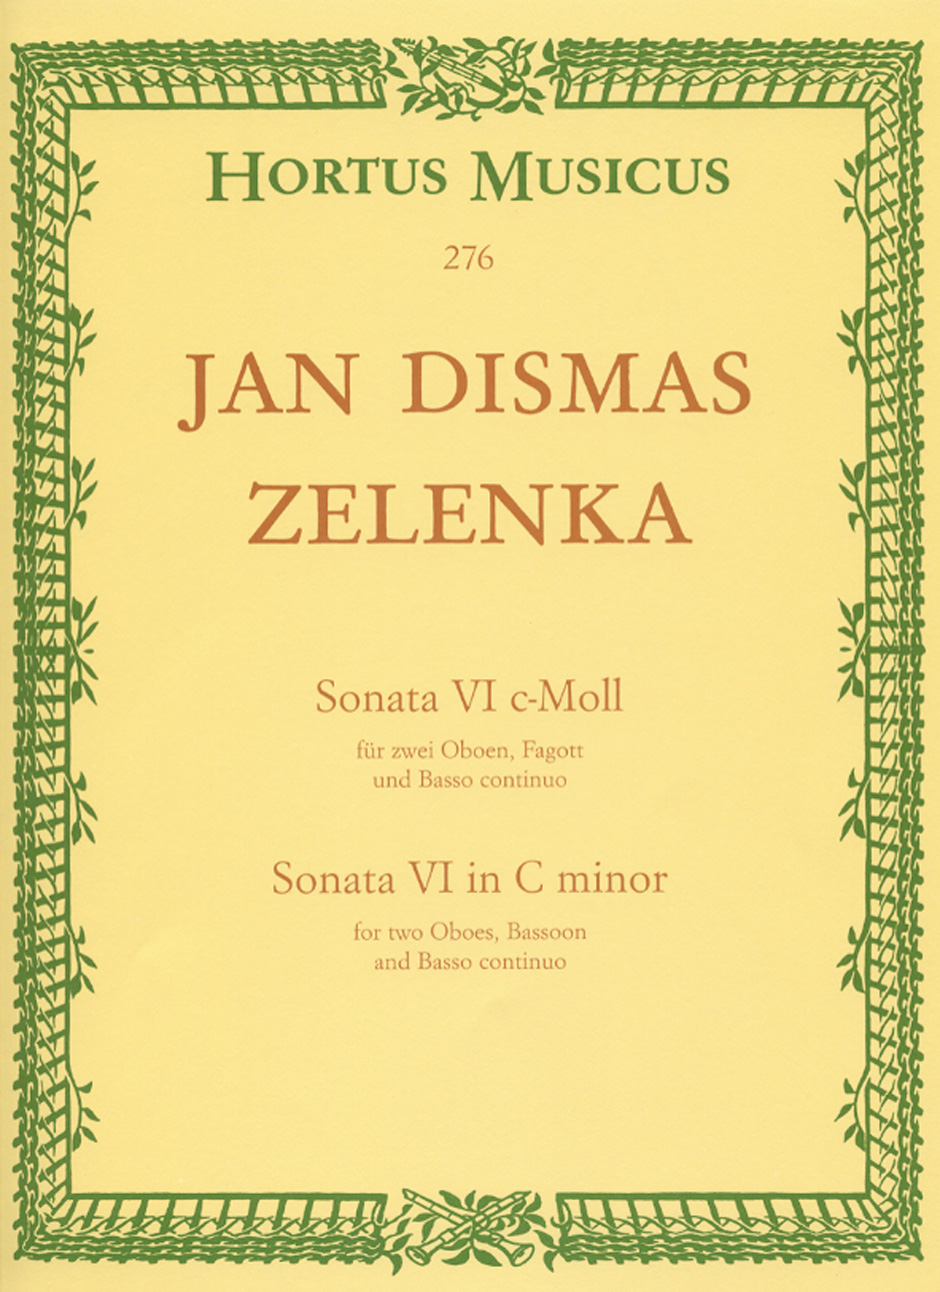 Sonate VIC-Moll Für 2 Oboen, Fagott Und Basso Continuo (ZELENKA JAN DISMAS)